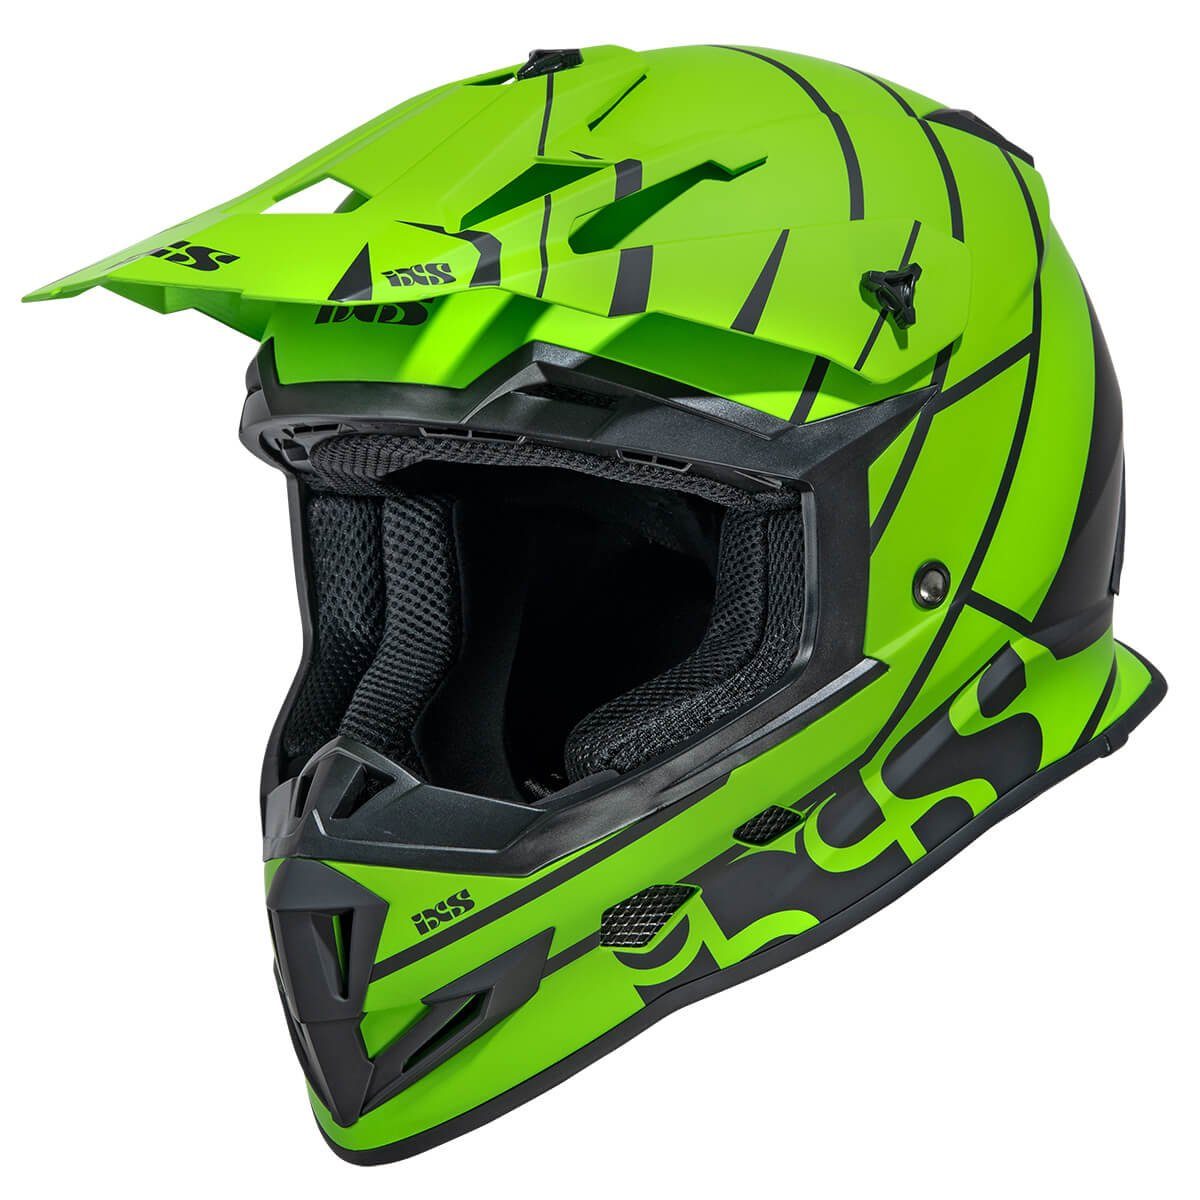 IXS Motocrosshelm »IXS Motocrosshelm 361 2.2 matt grün - schwarz«